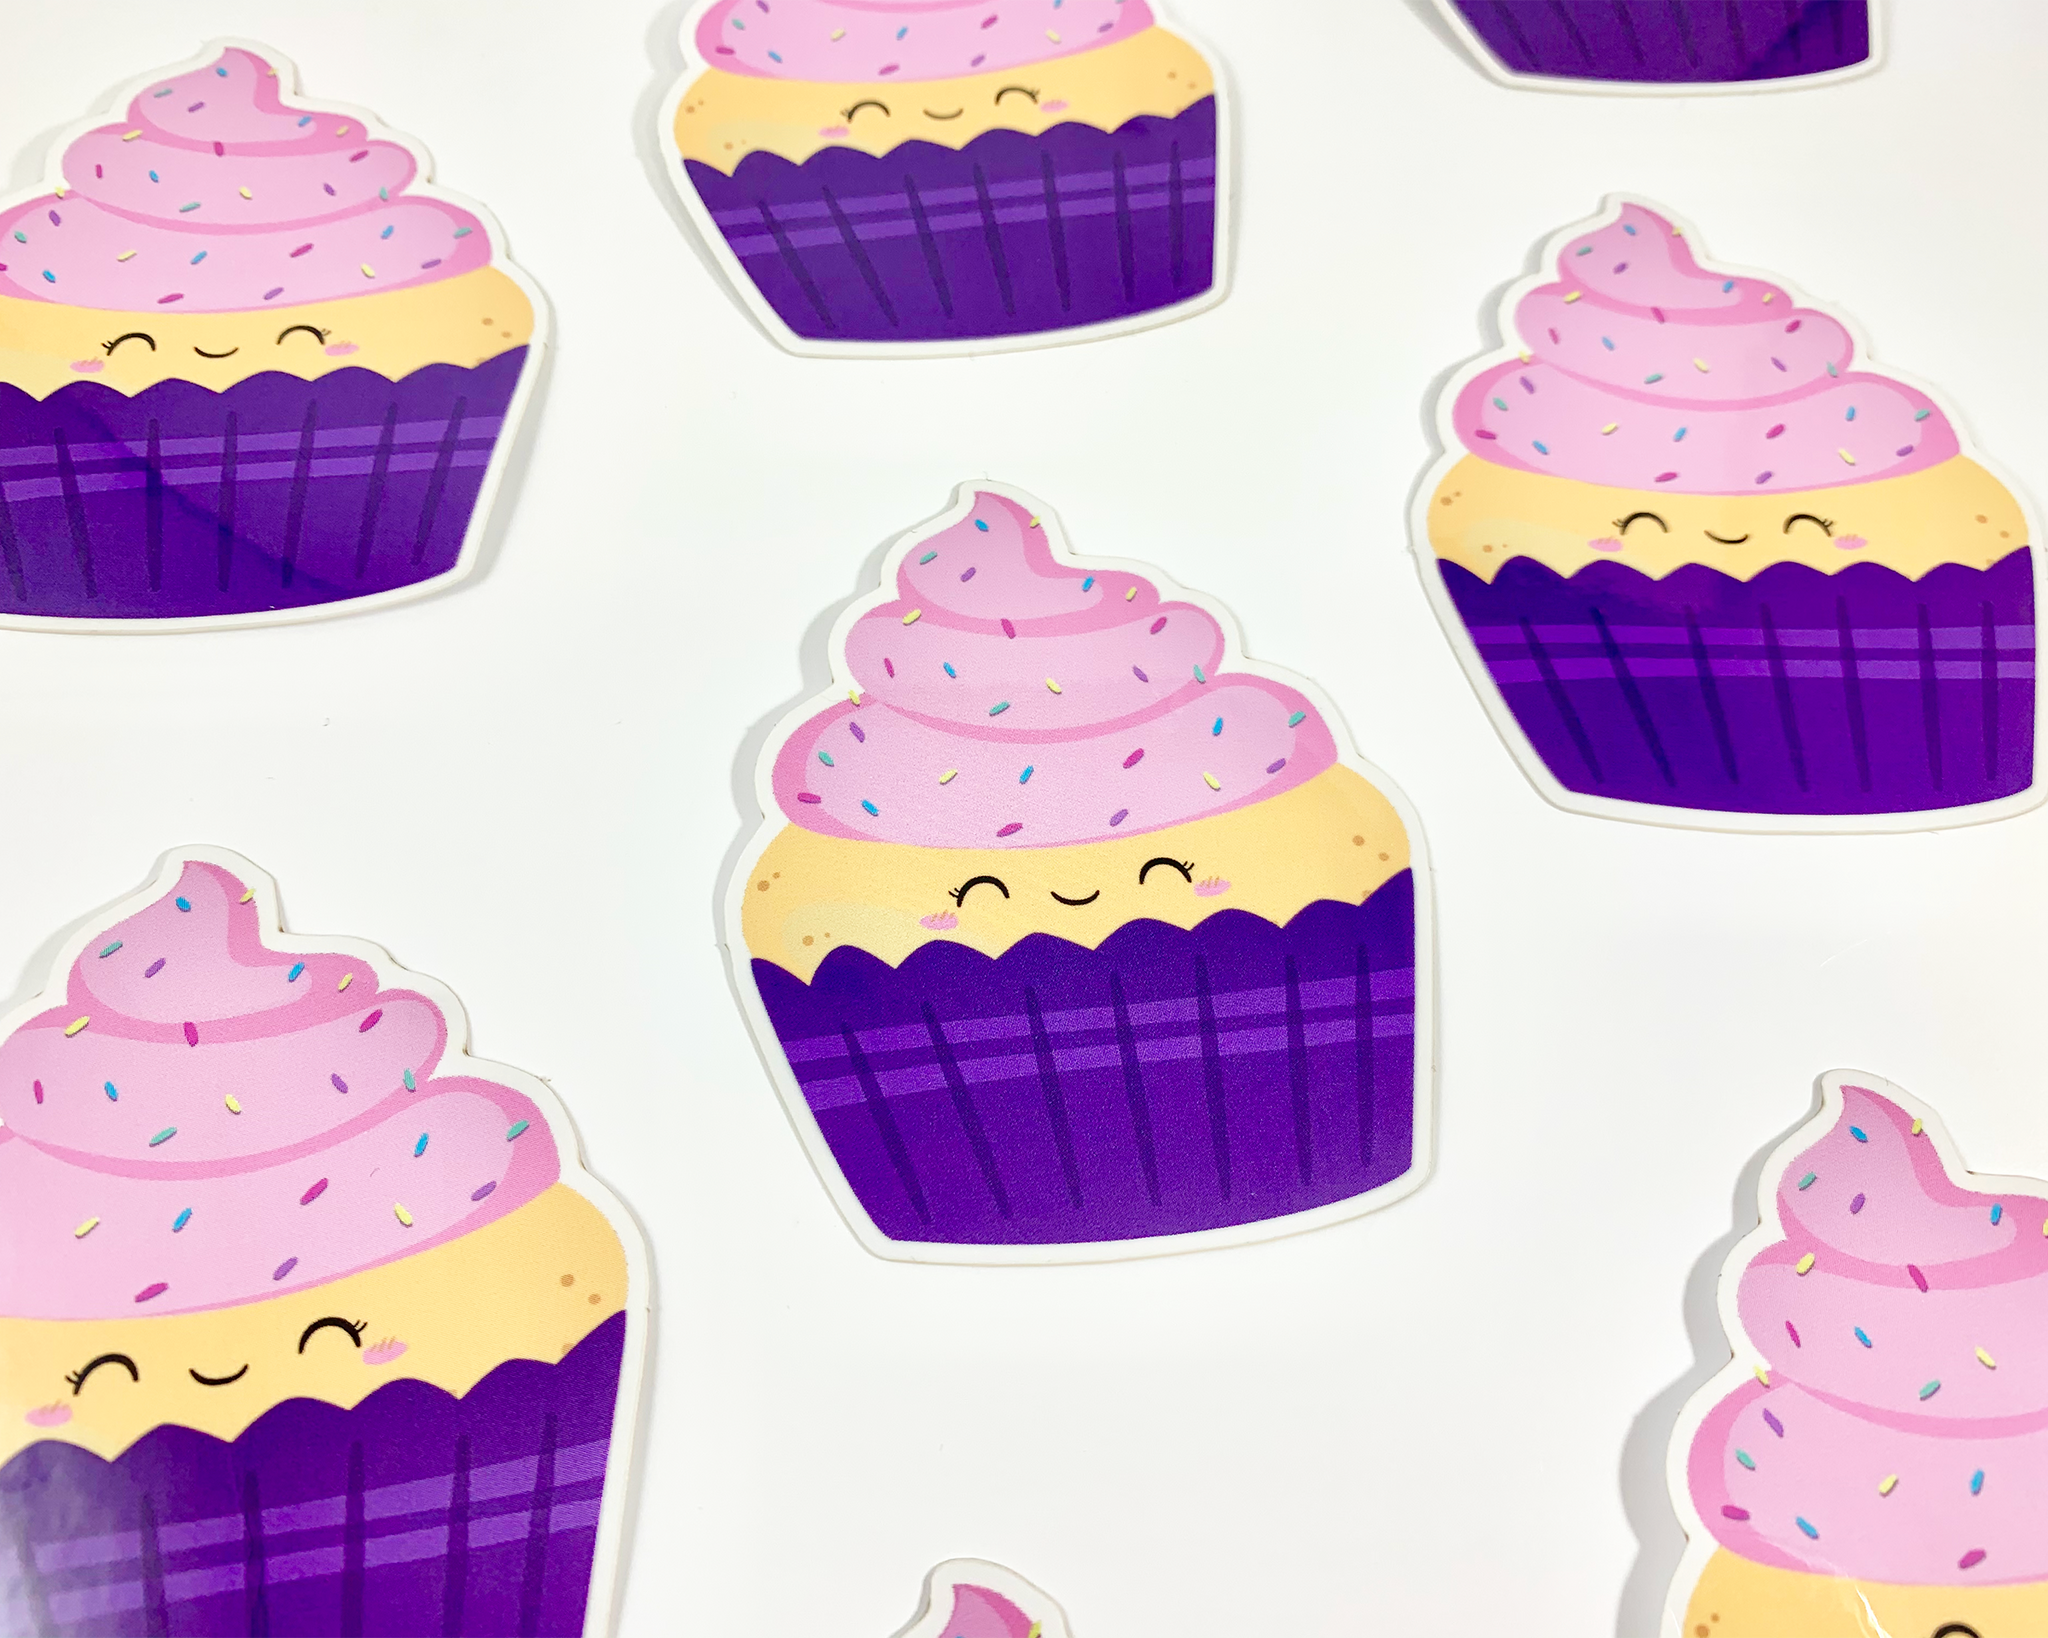 Cupcake' Sticker